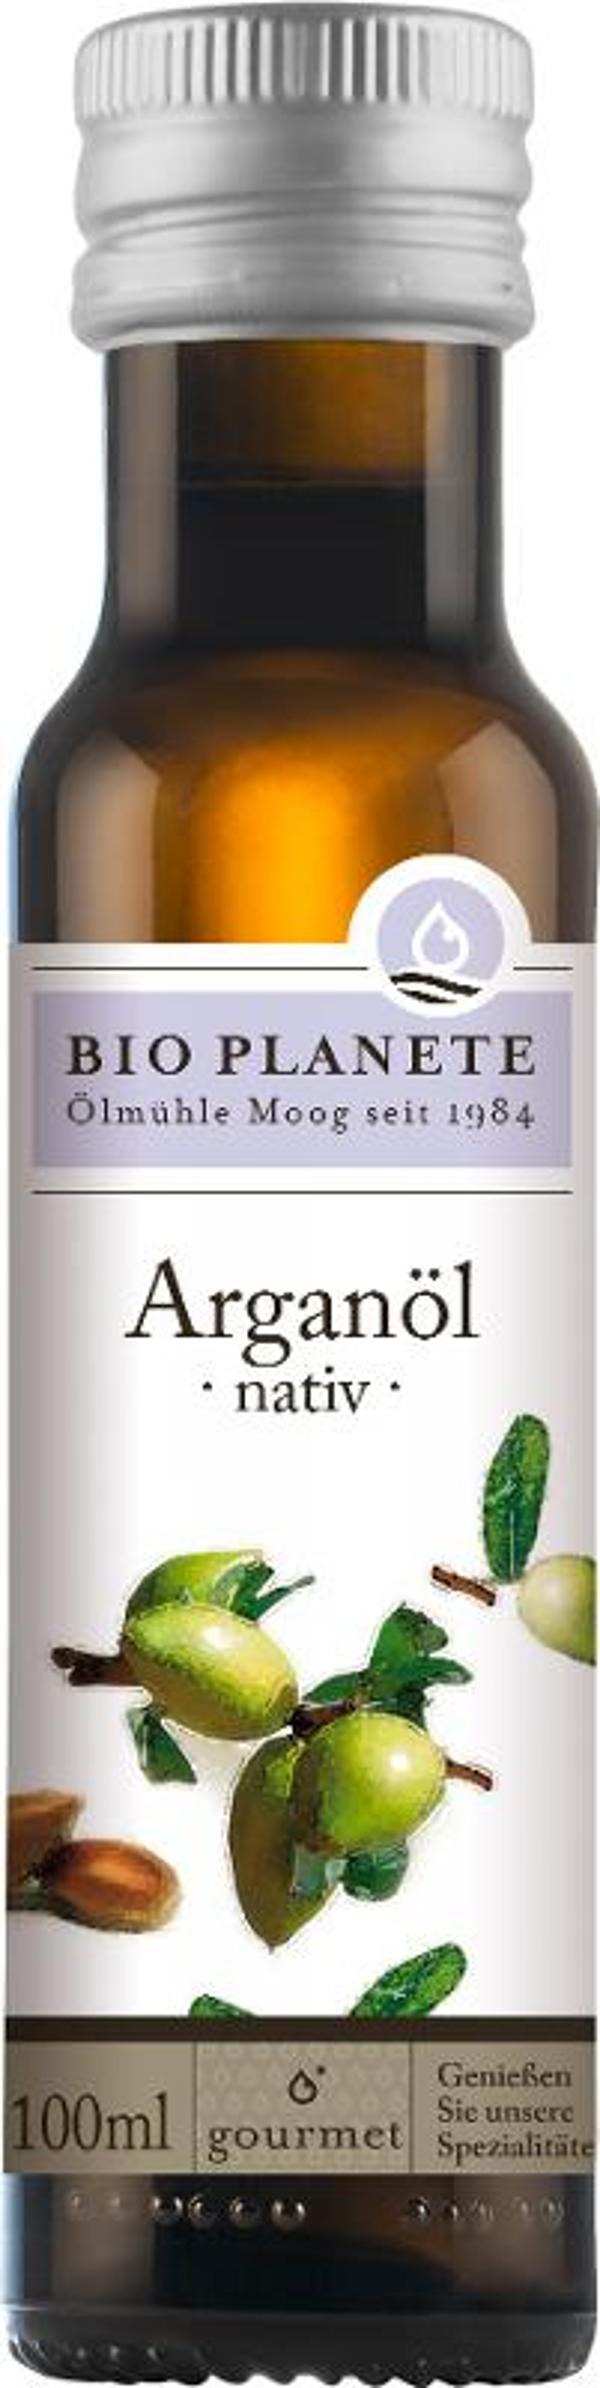 Produktfoto zu Arganöl nativ